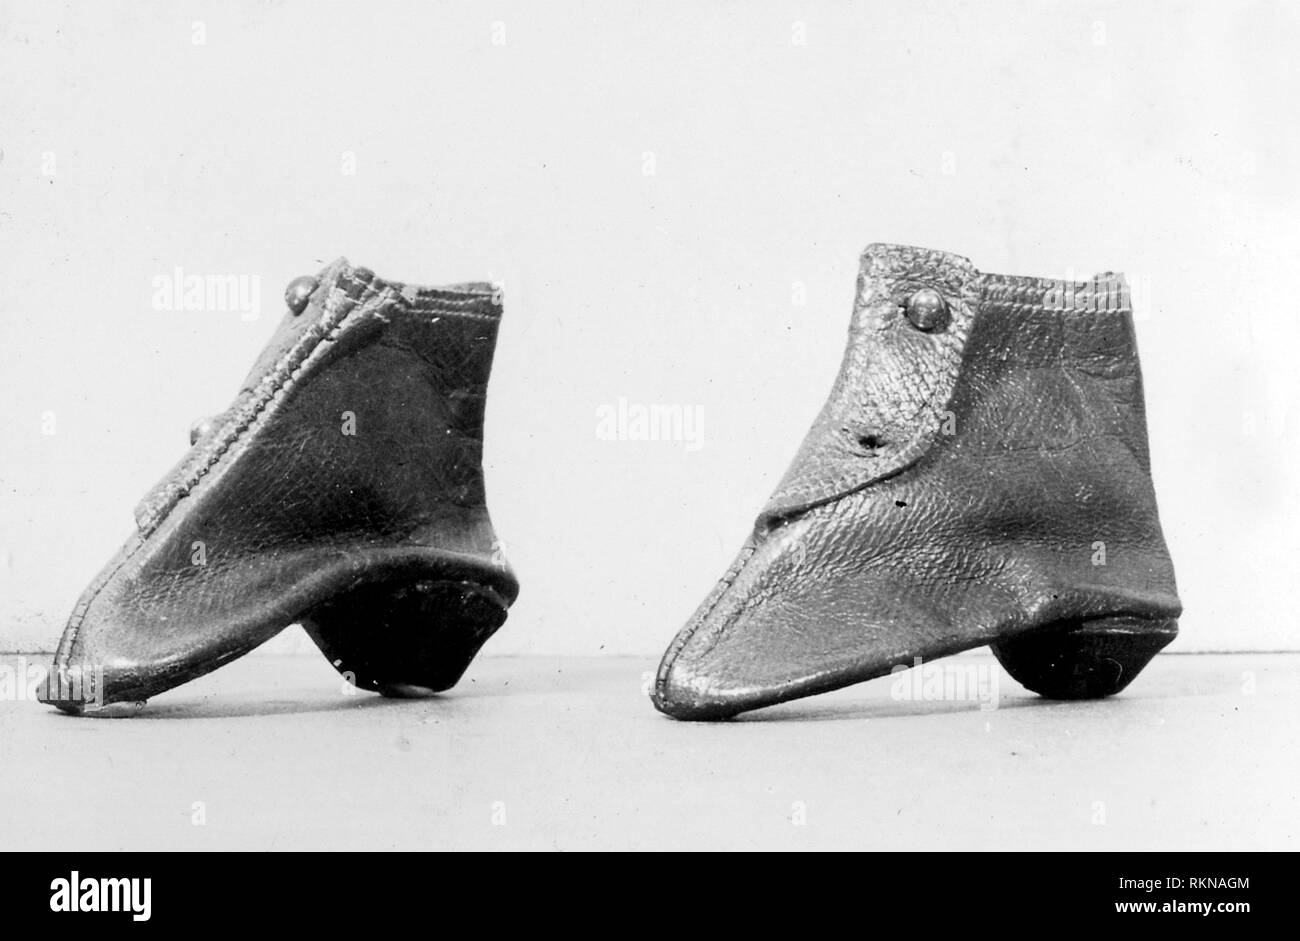 Doll's Schuhe - 19. Jahrhundert - Vereinigte Staaten - Herkunft: USA,  Datum: 1801 - 1900, Mittel: Blau Leder Stockfotografie - Alamy